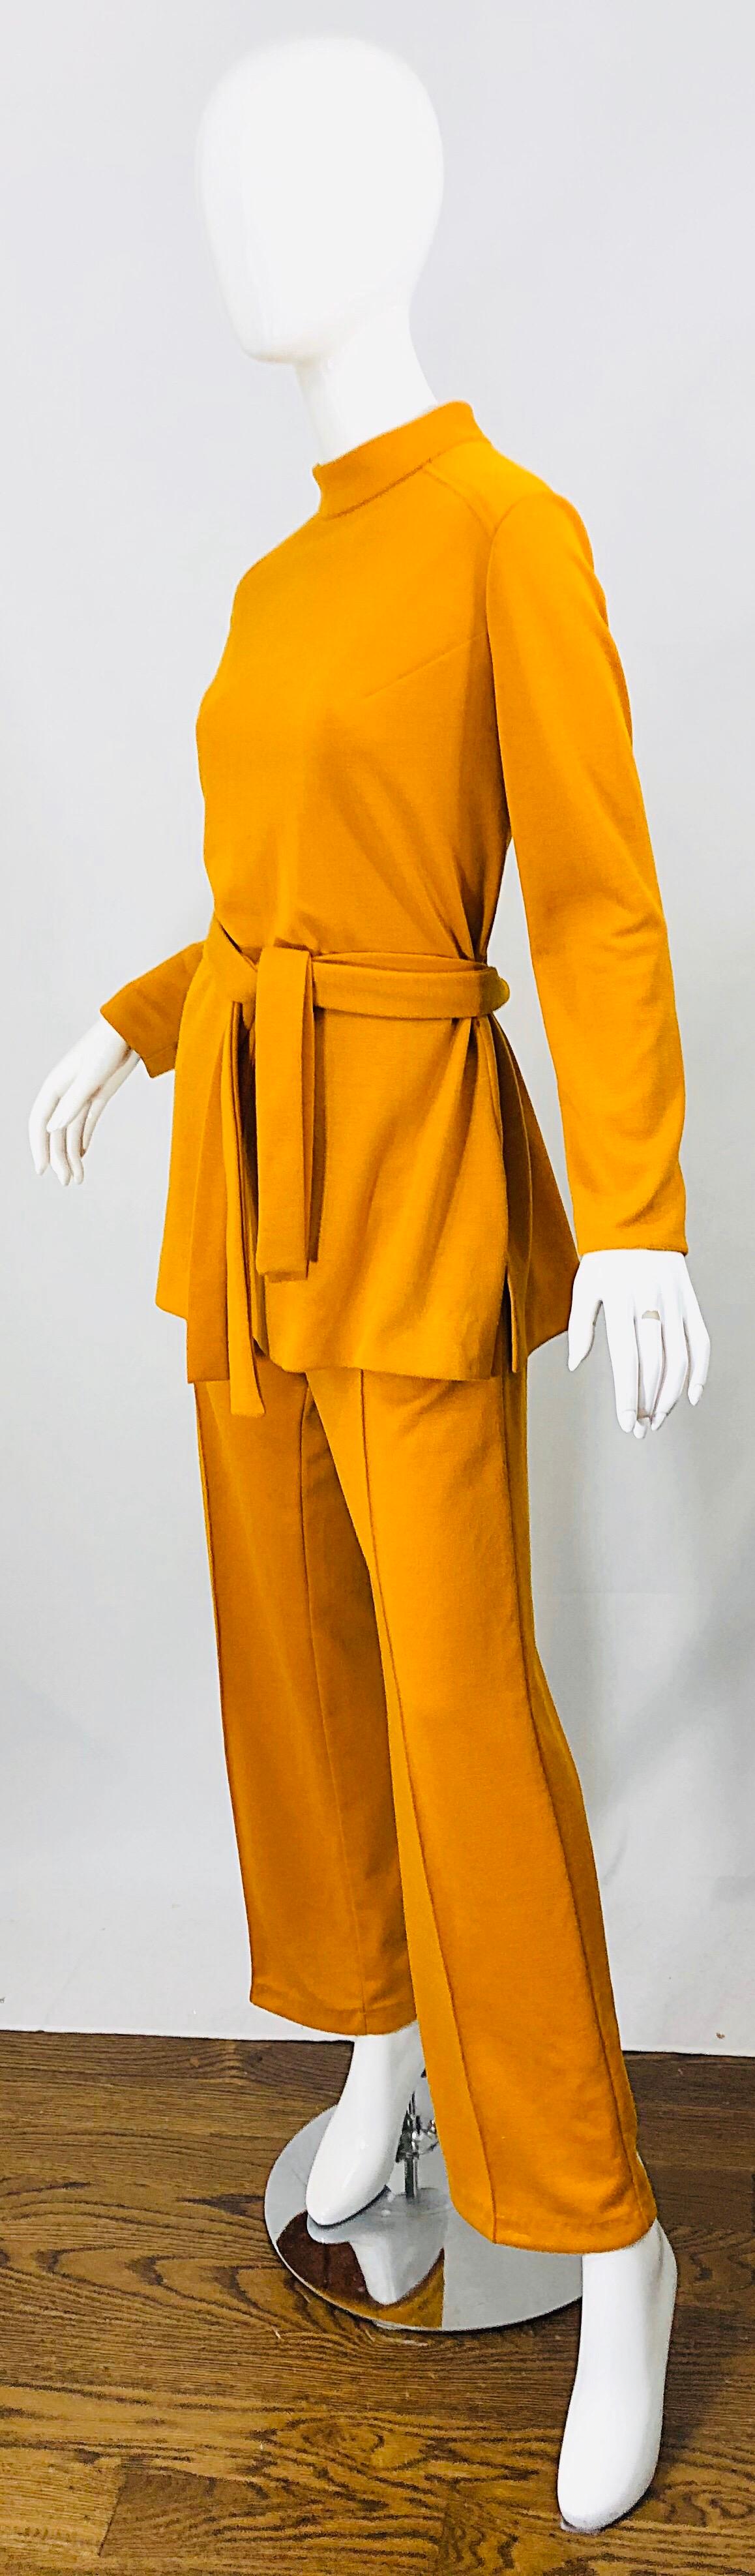 1970s Marigold Mustard Yellow Four Piece Vintage 70s Knit Shirt + Pants + Belt For Sale 3